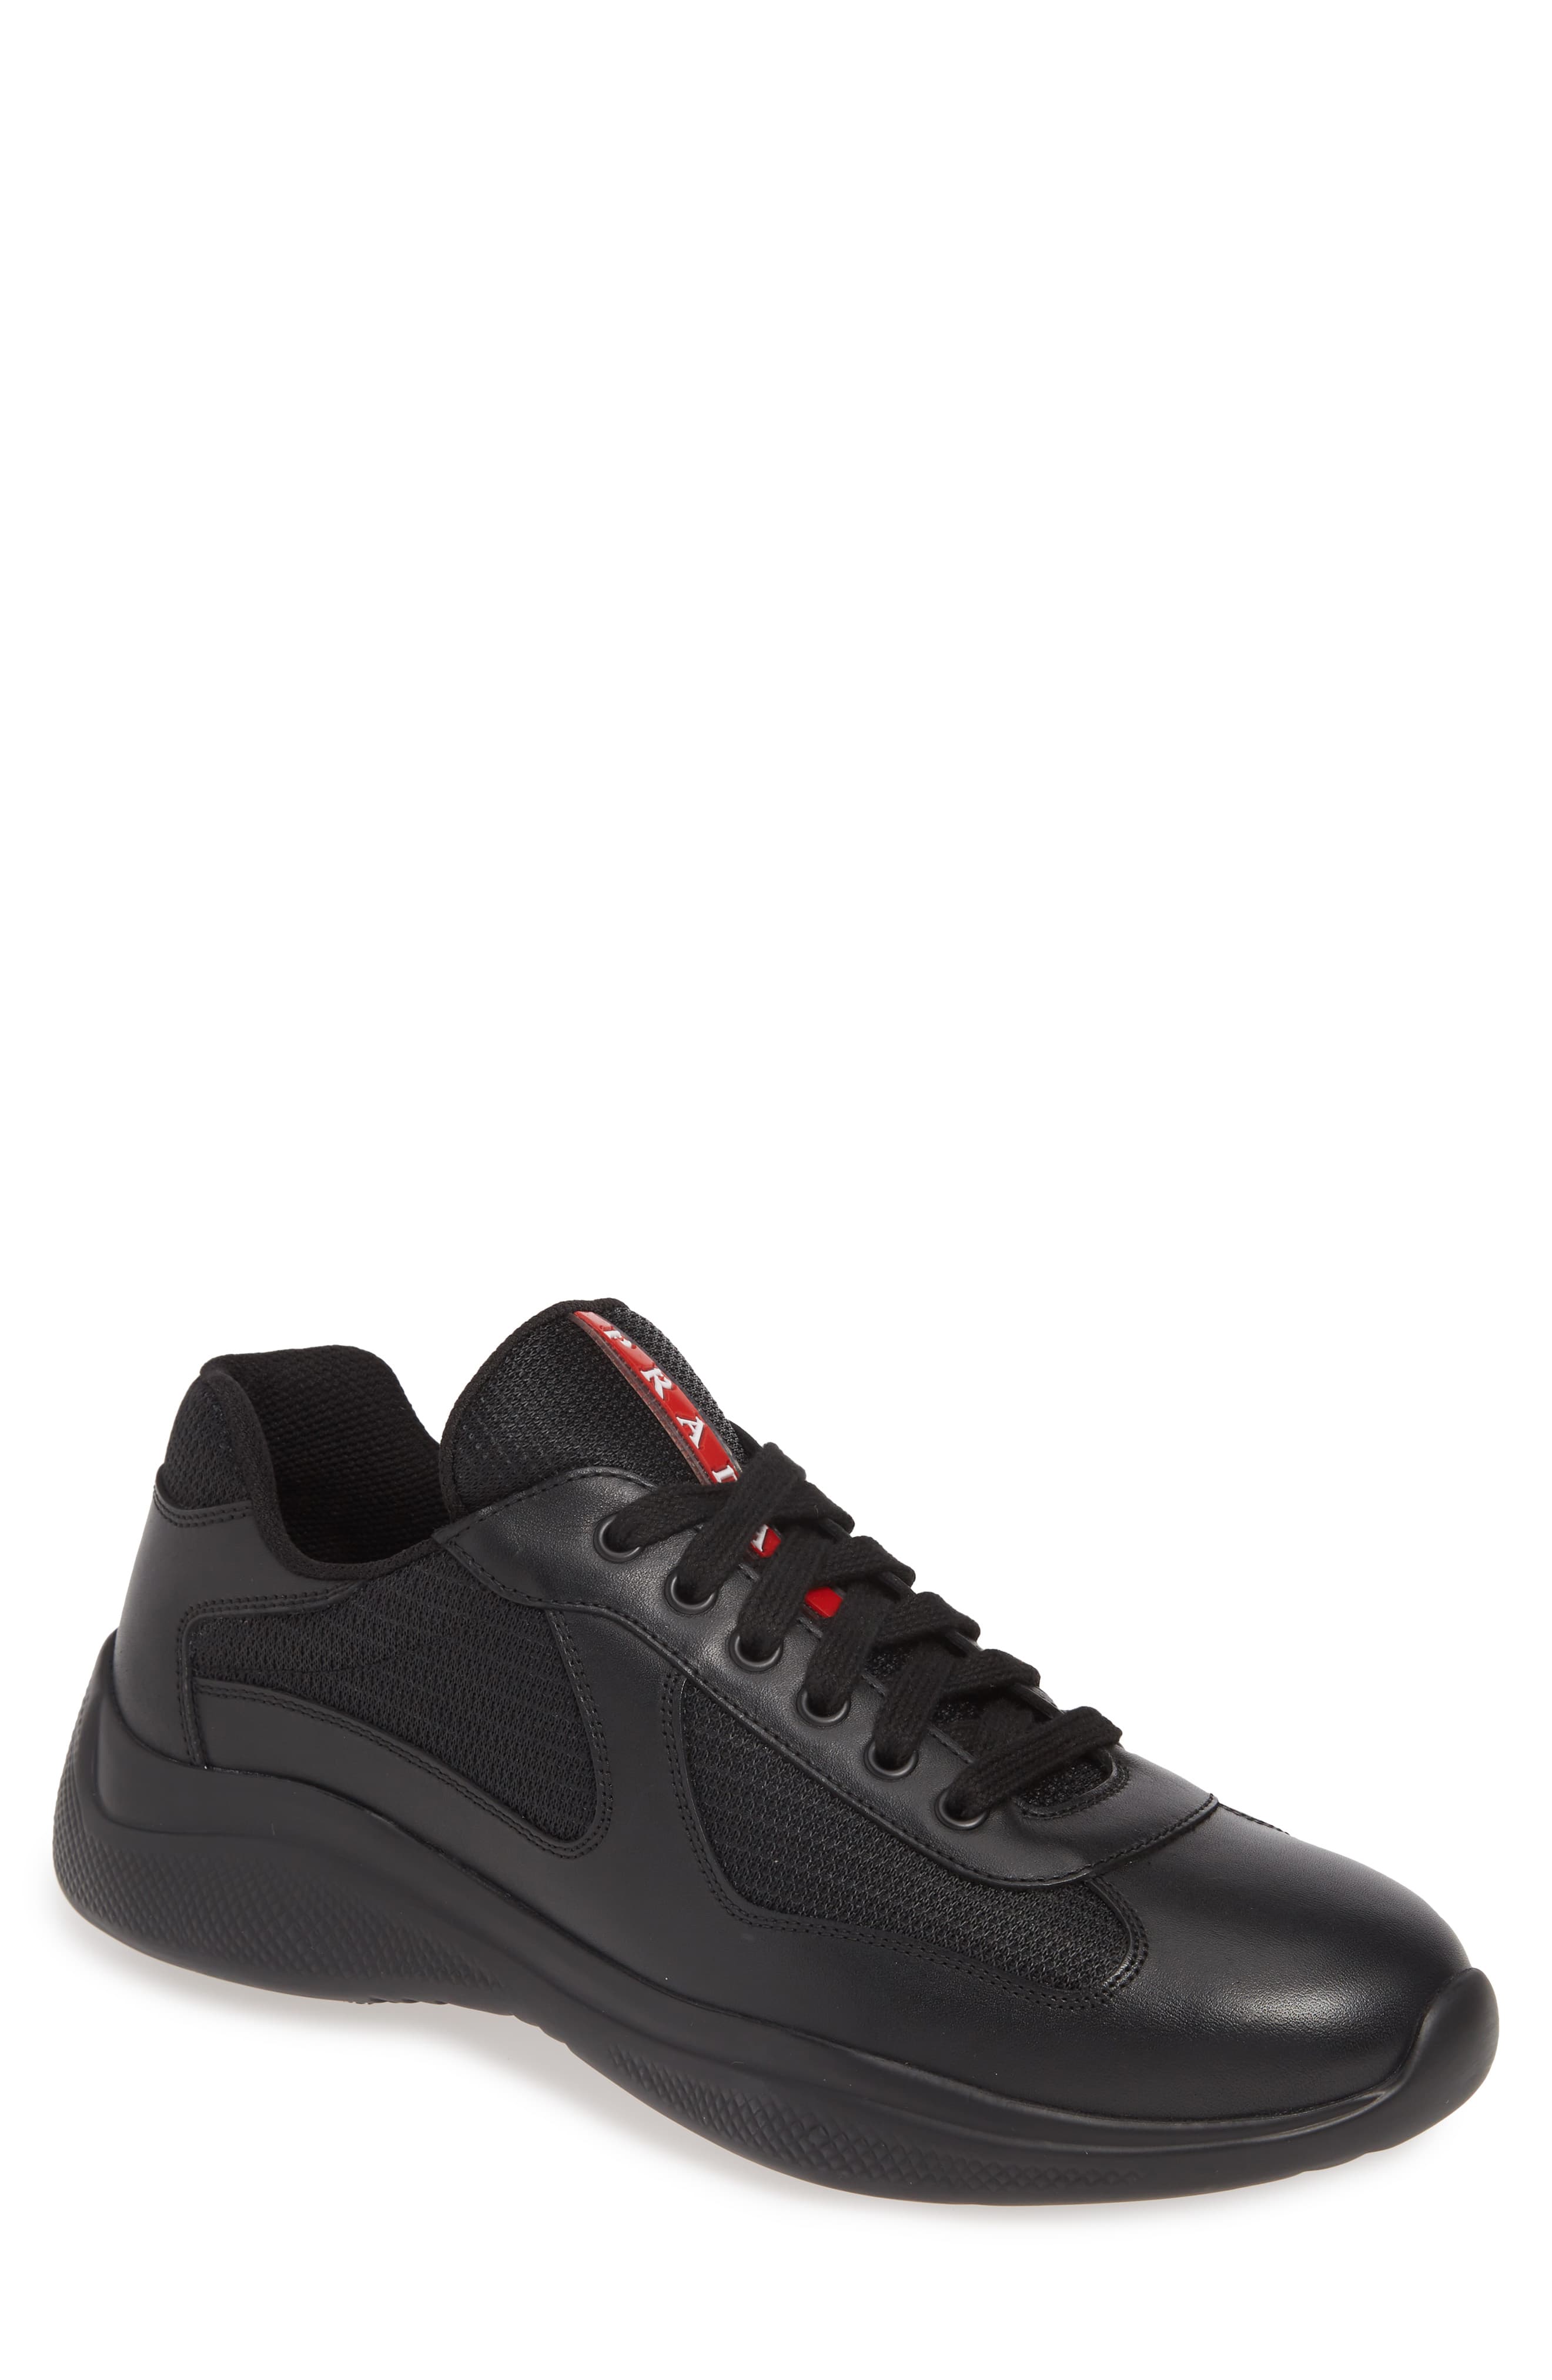 Men’s Prada Americas Cup Sneaker, Size 8.5US / 7.5UK – Black | The ...